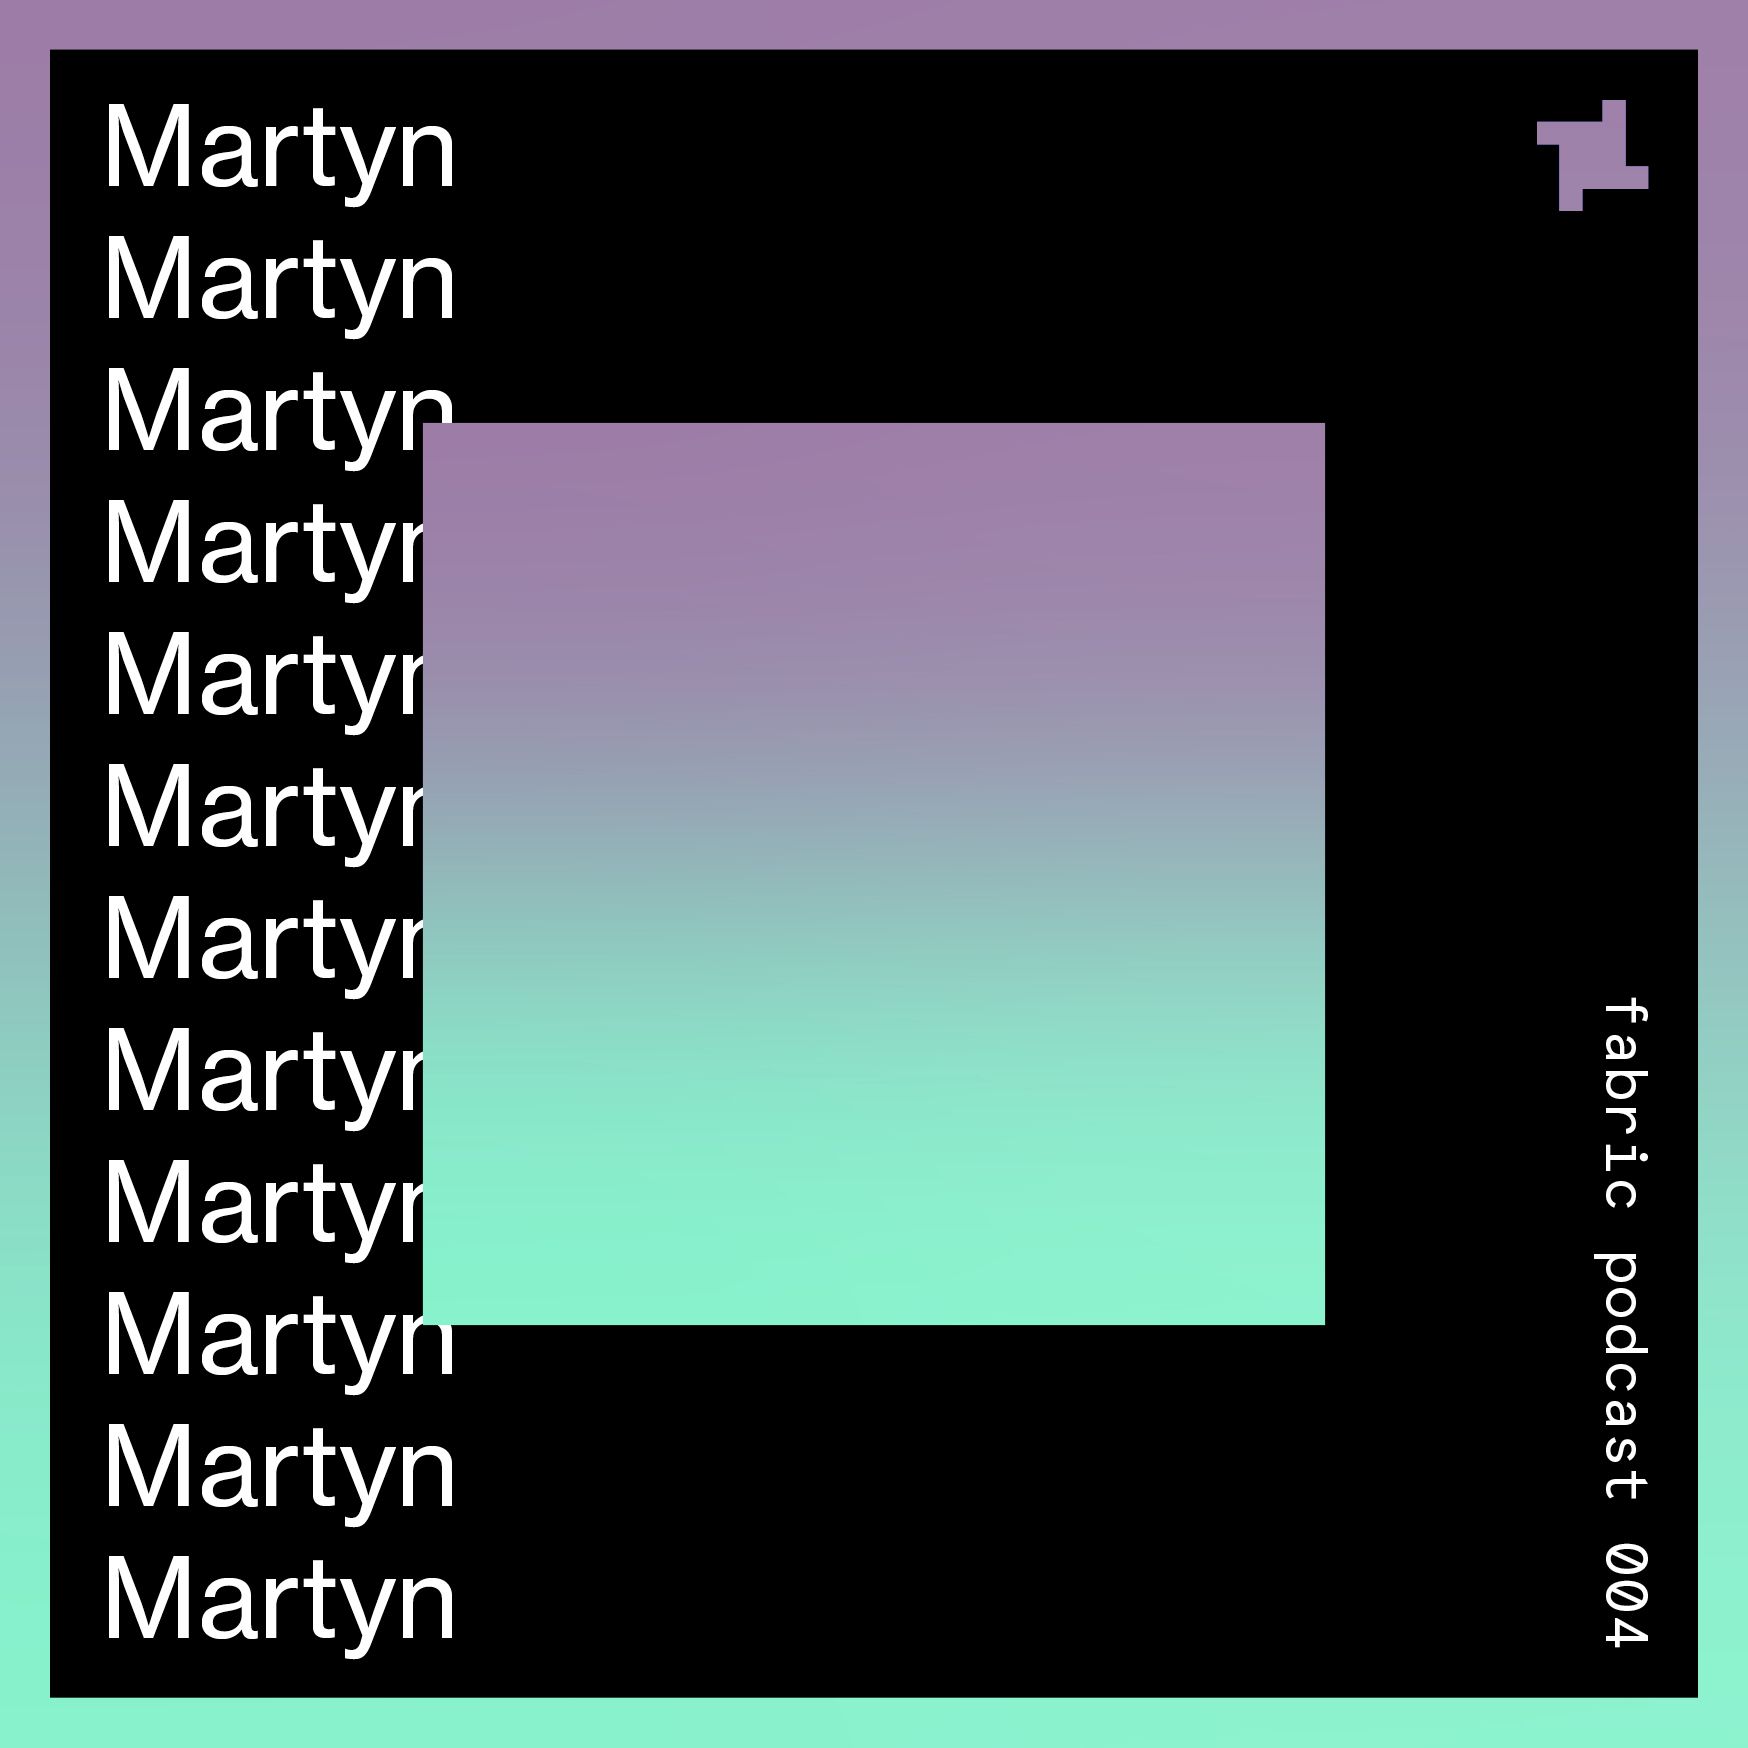 004 - Martyn - fabric podcast